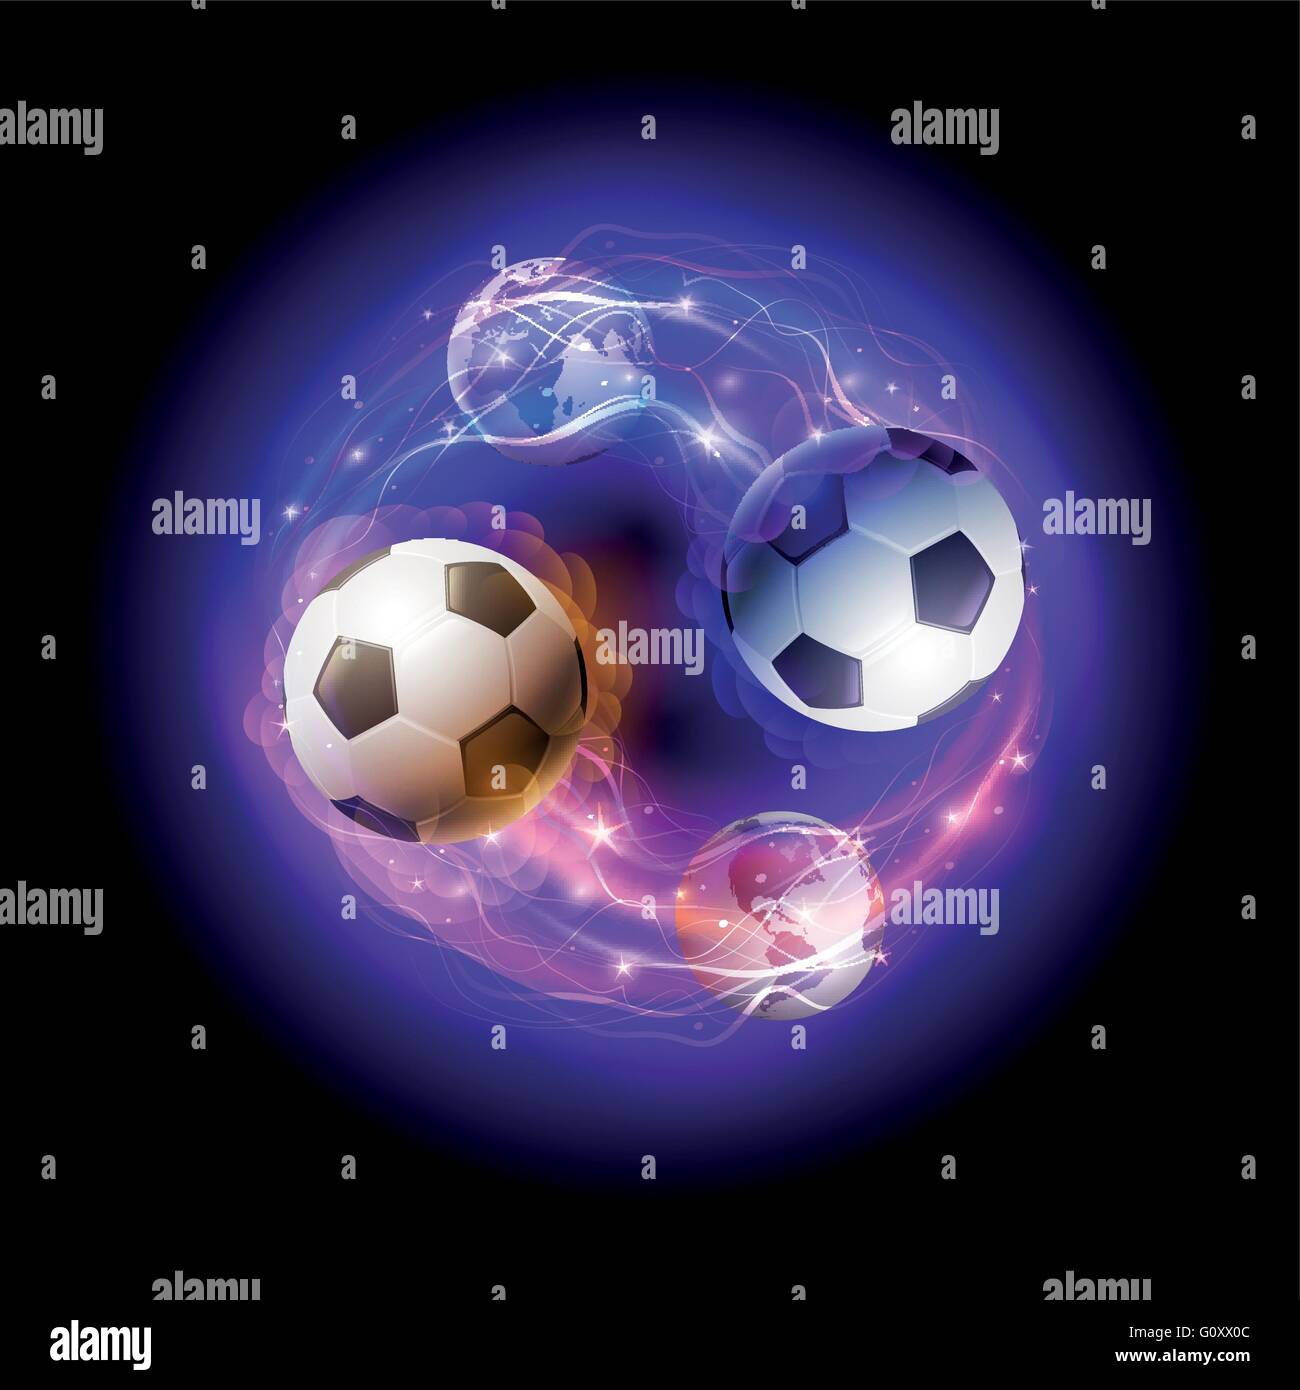 Soccer ball in flames and world spheres against black background. Vector world soccer concept illustration. Stock Vector